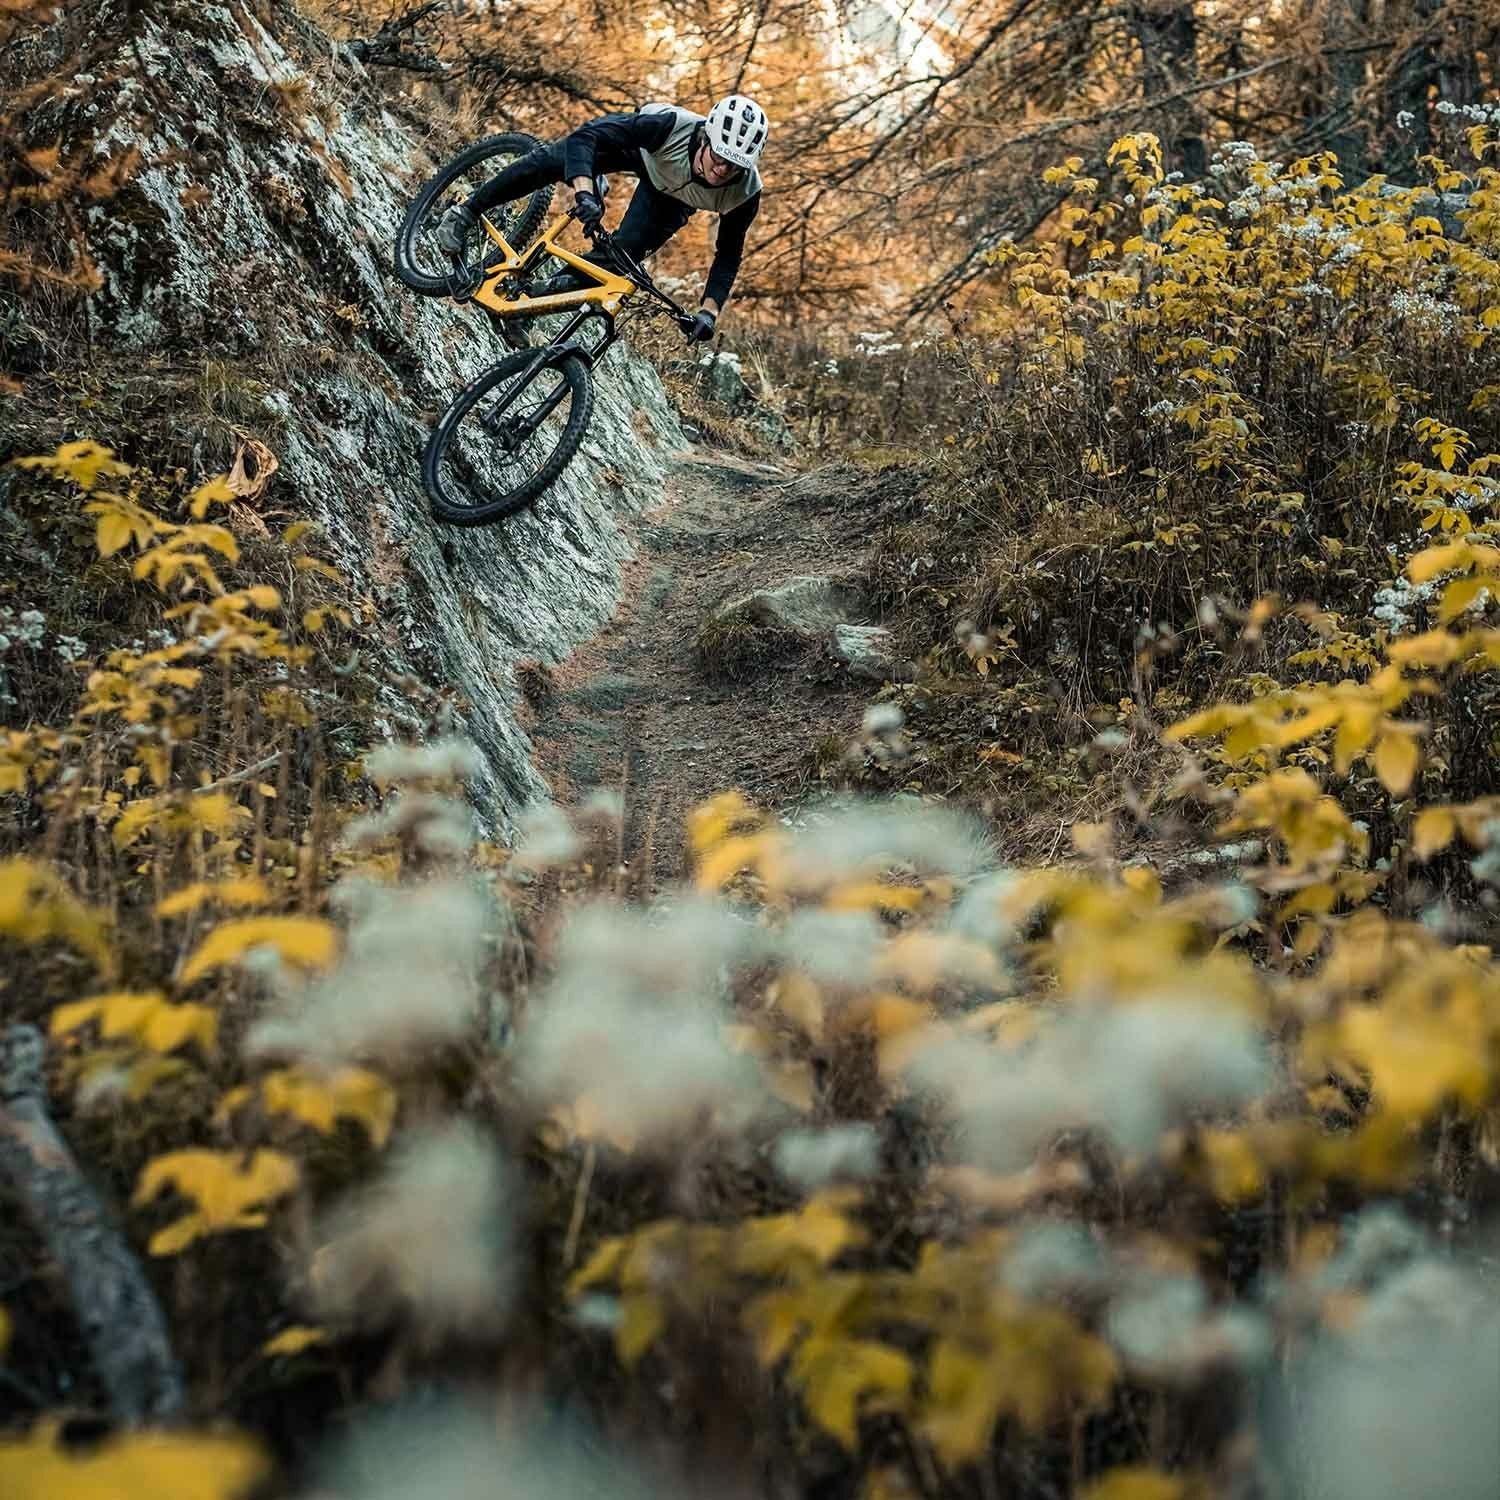 A mountain bike riding his Santa Cruz Bronson on a steep rocky wall ride